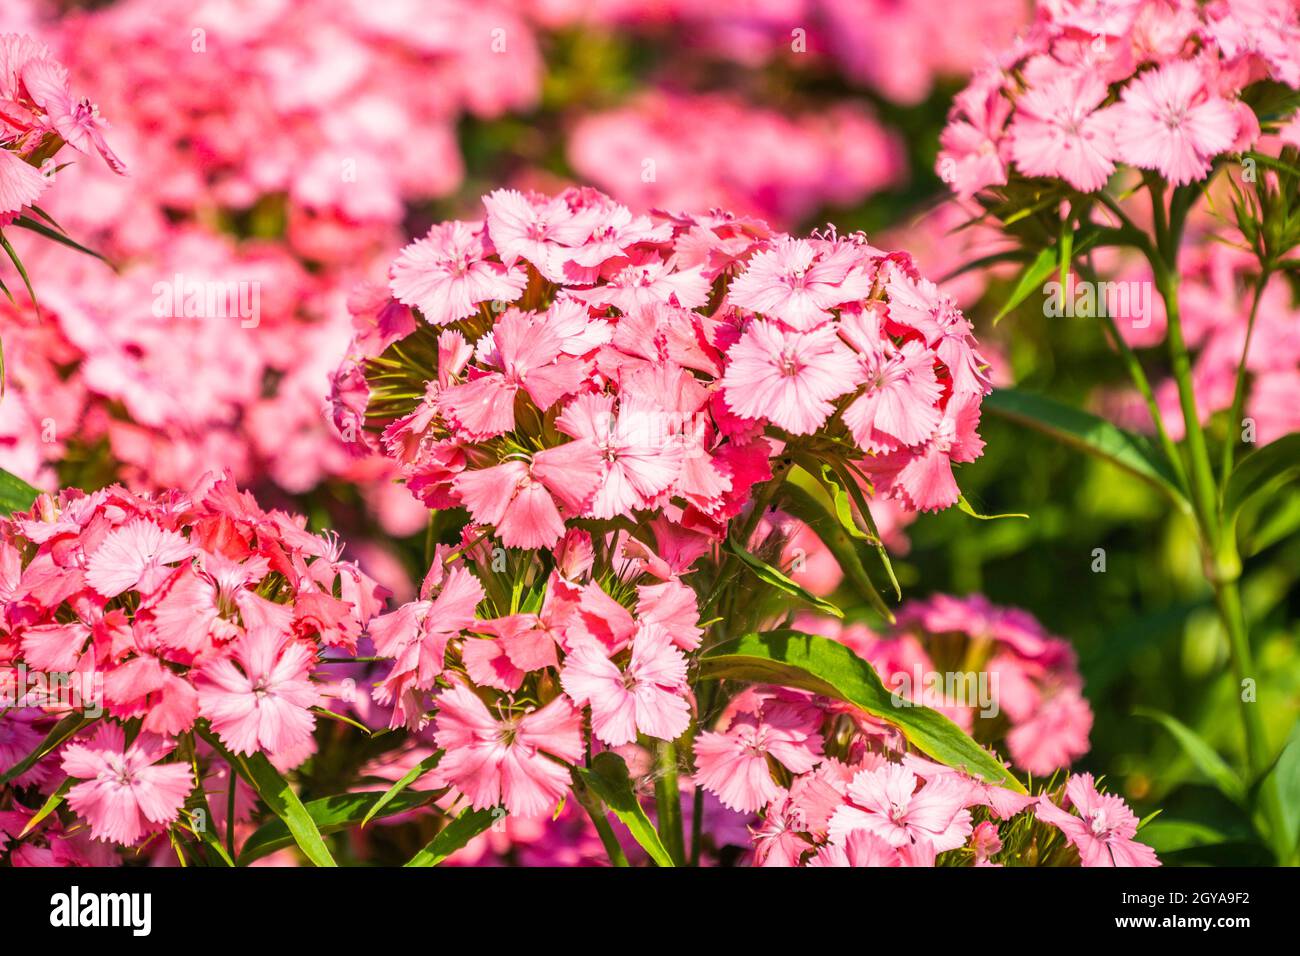 Stipa Gigantea Flowers in the Garden at Sunny Summer. Stock Photo